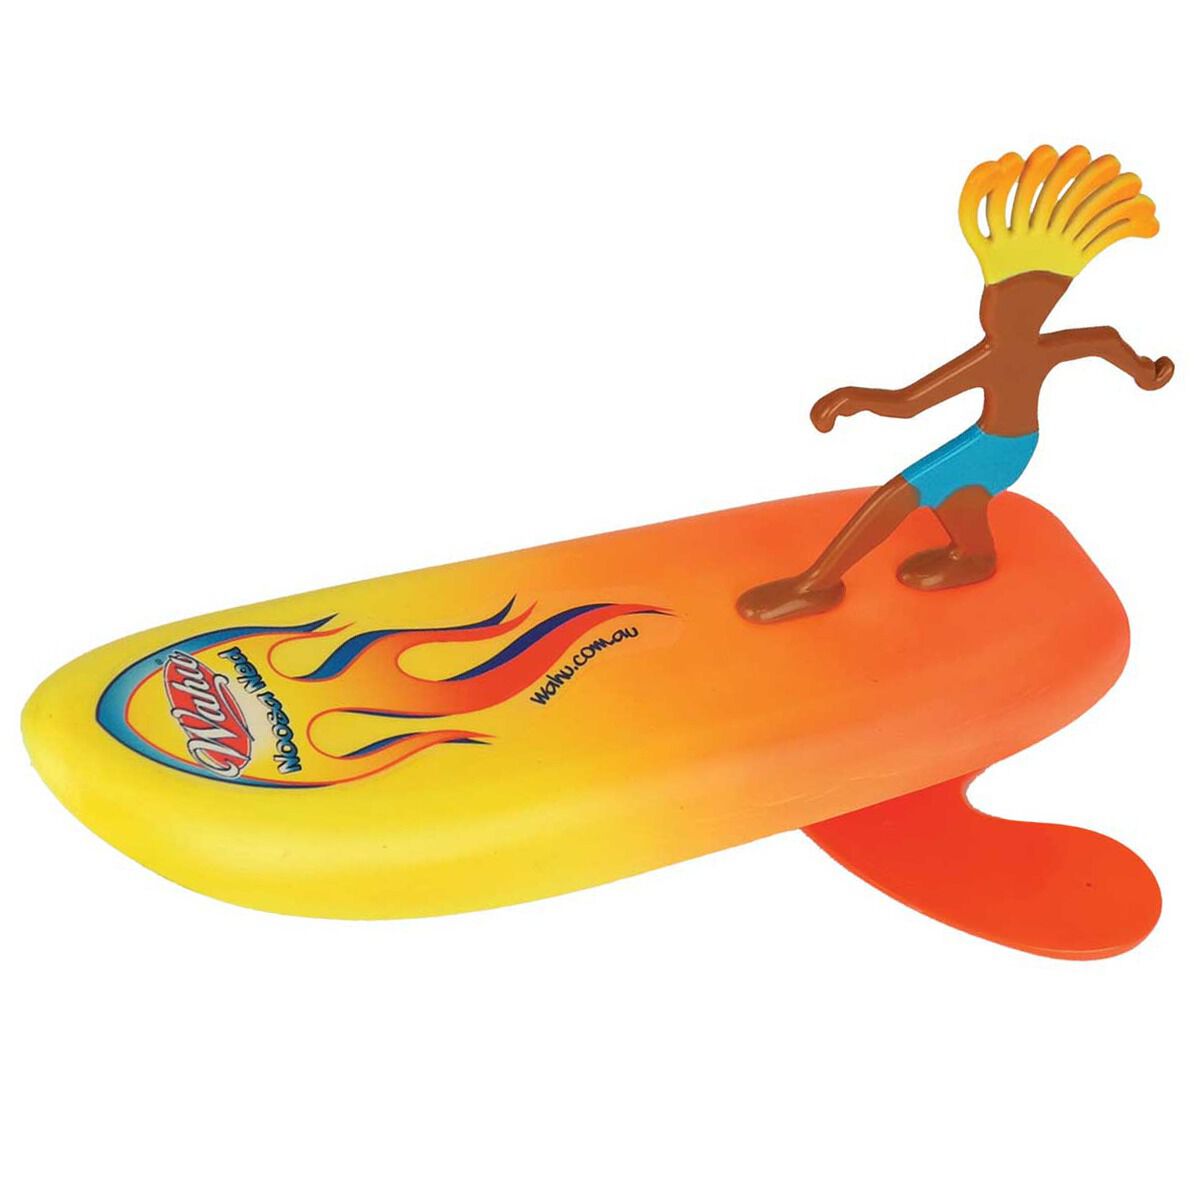 Wahu Surfer Dudes Toy Surfboard Assorted Rebel Sport 